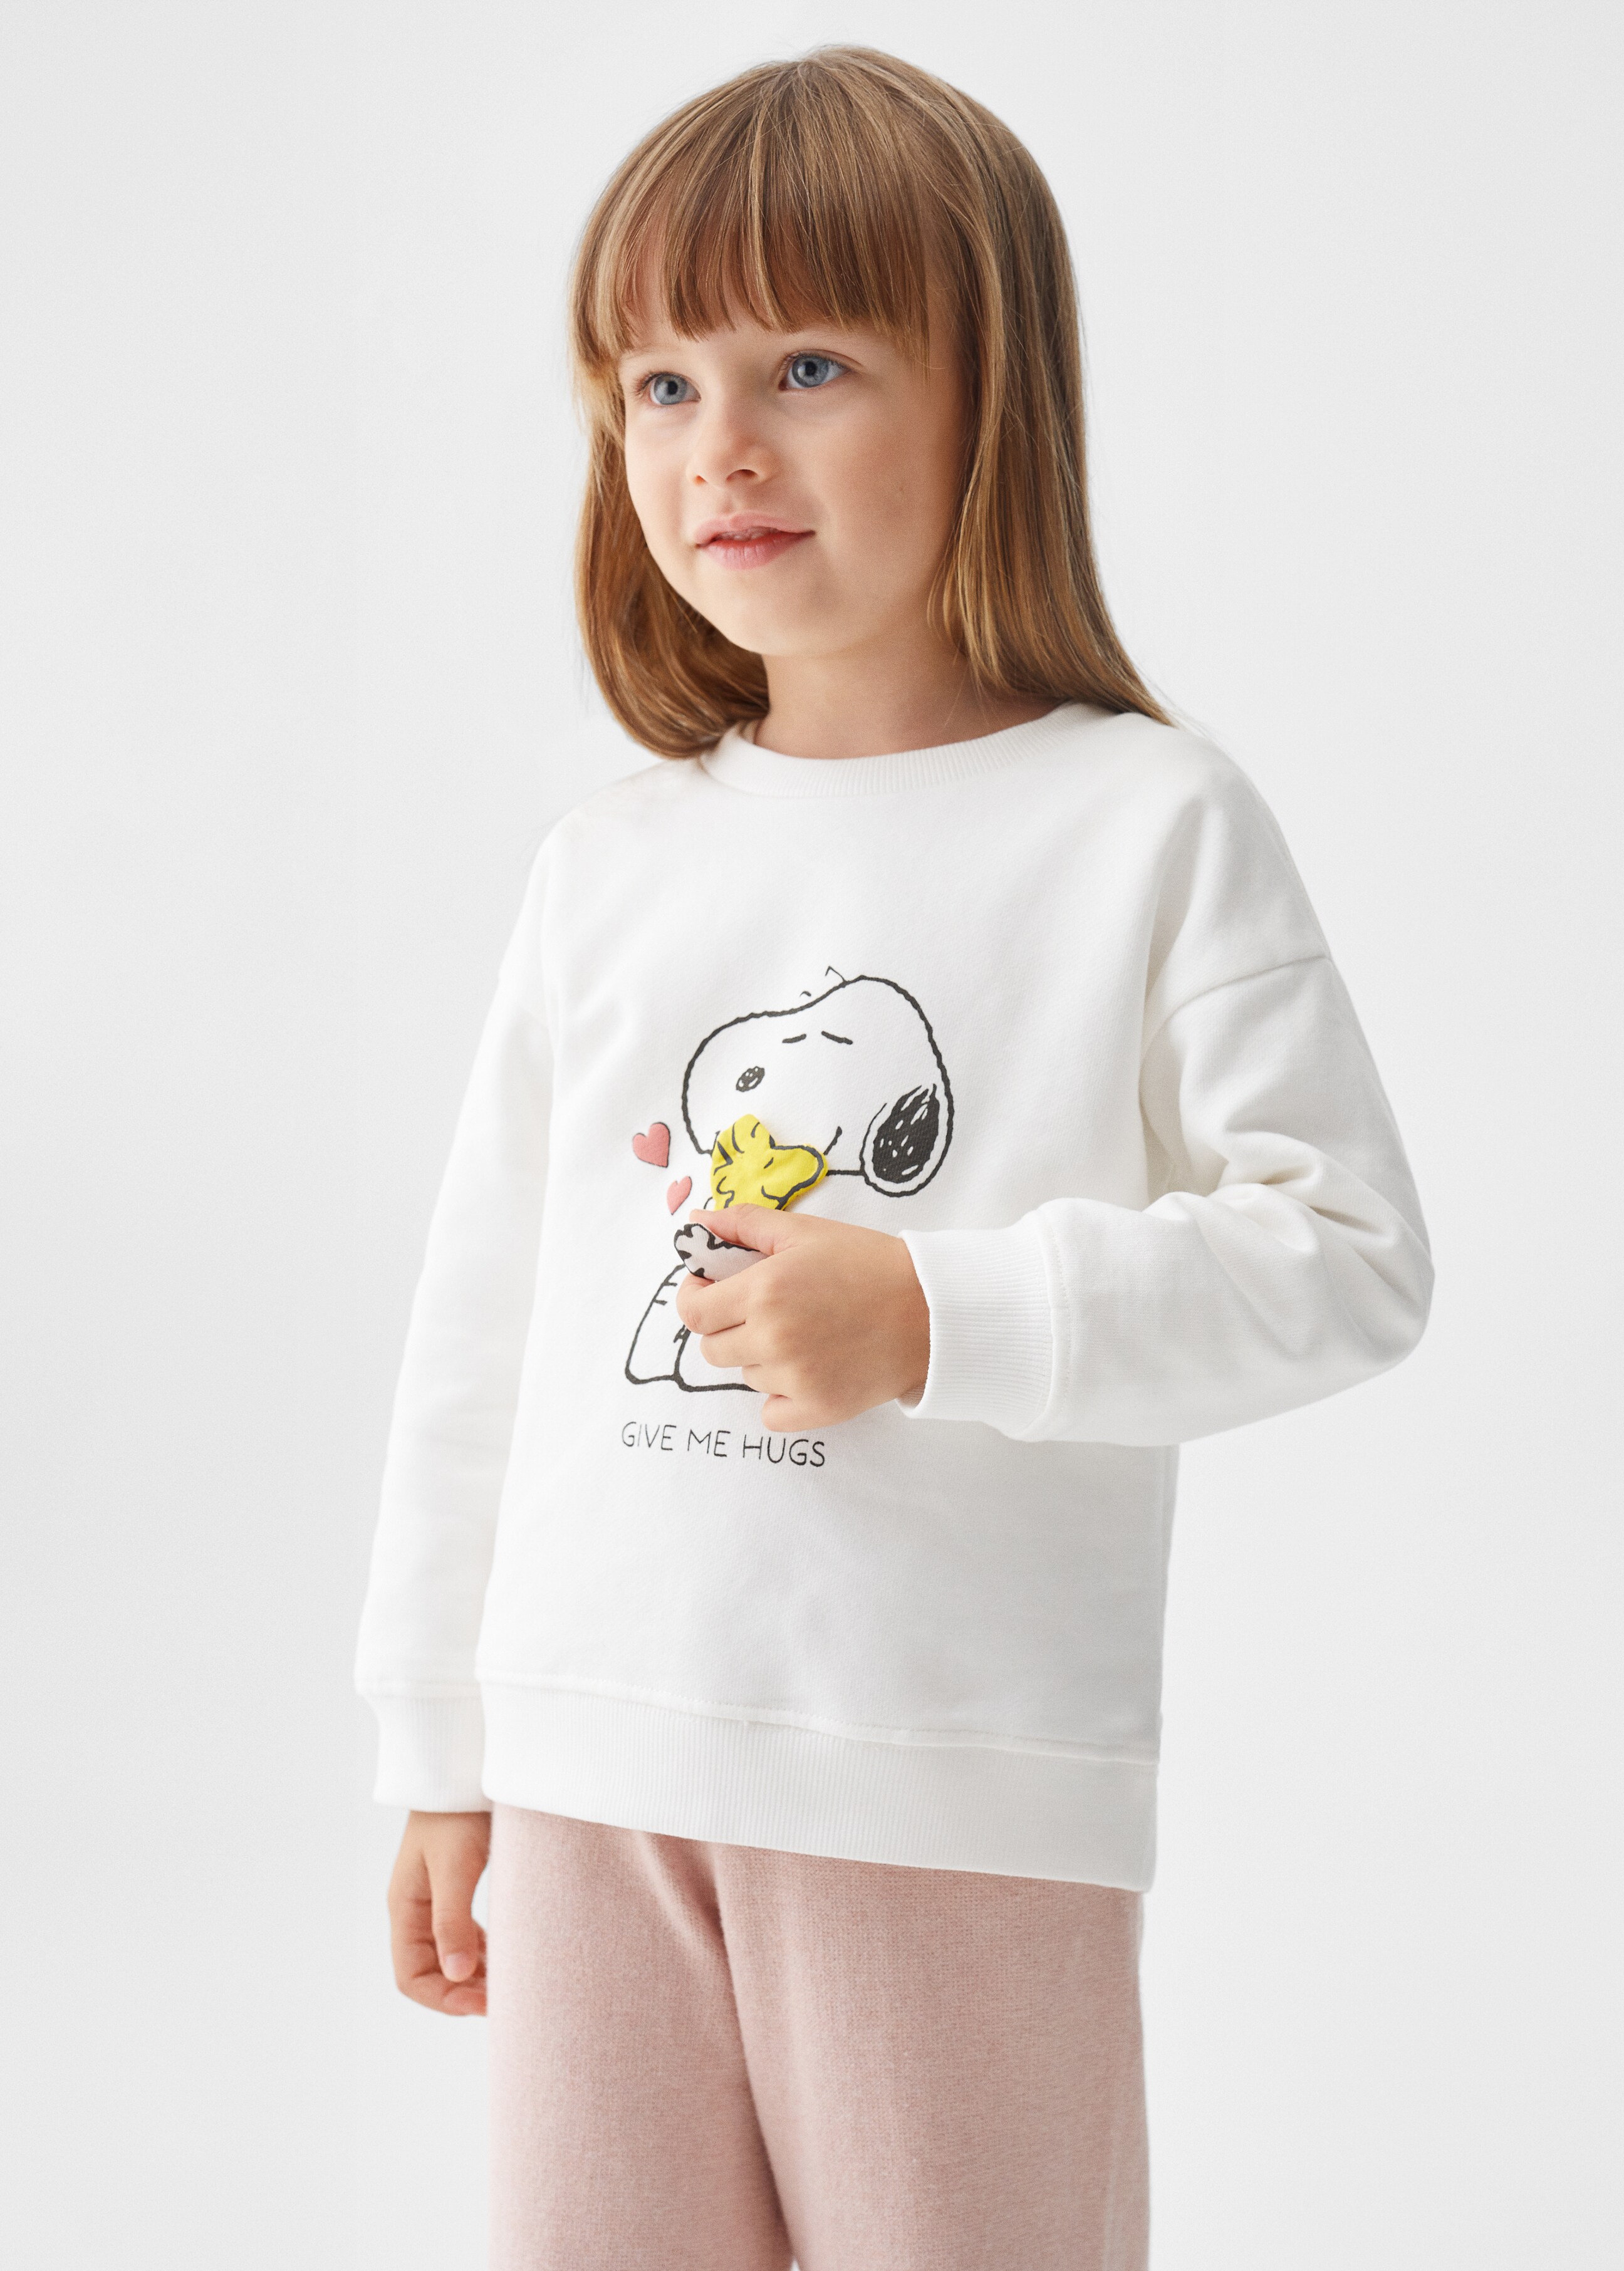 Snoopy cotton sweatshirt - Medium plane